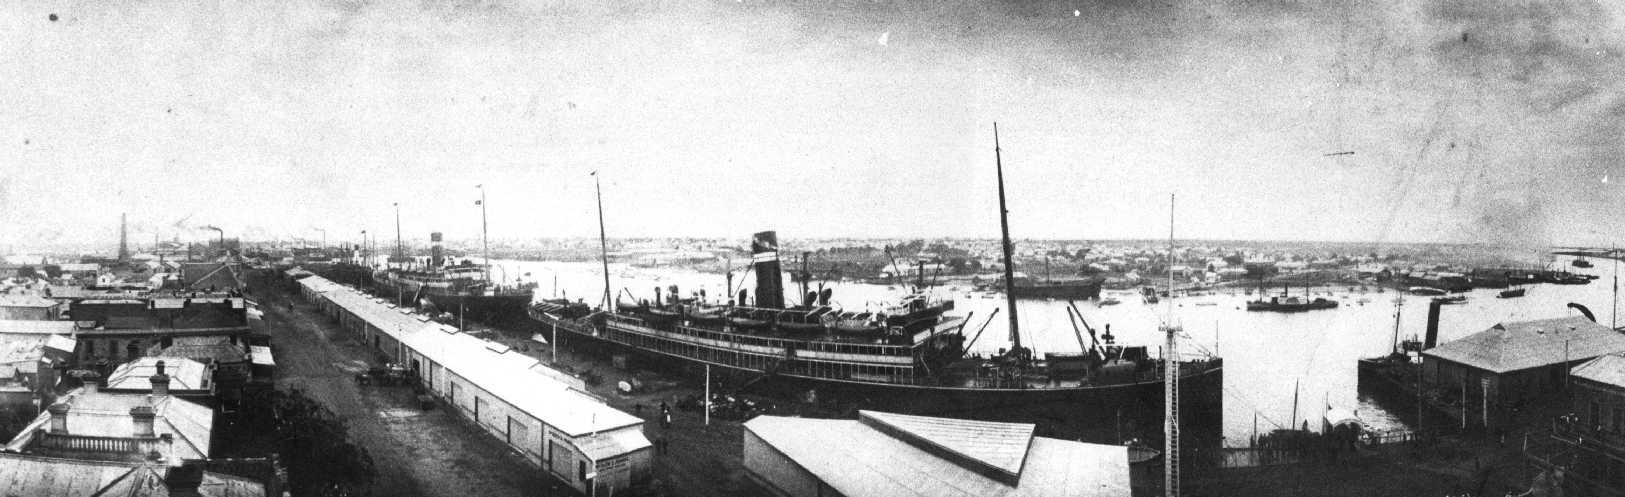 1903 passenger vessel berthed.